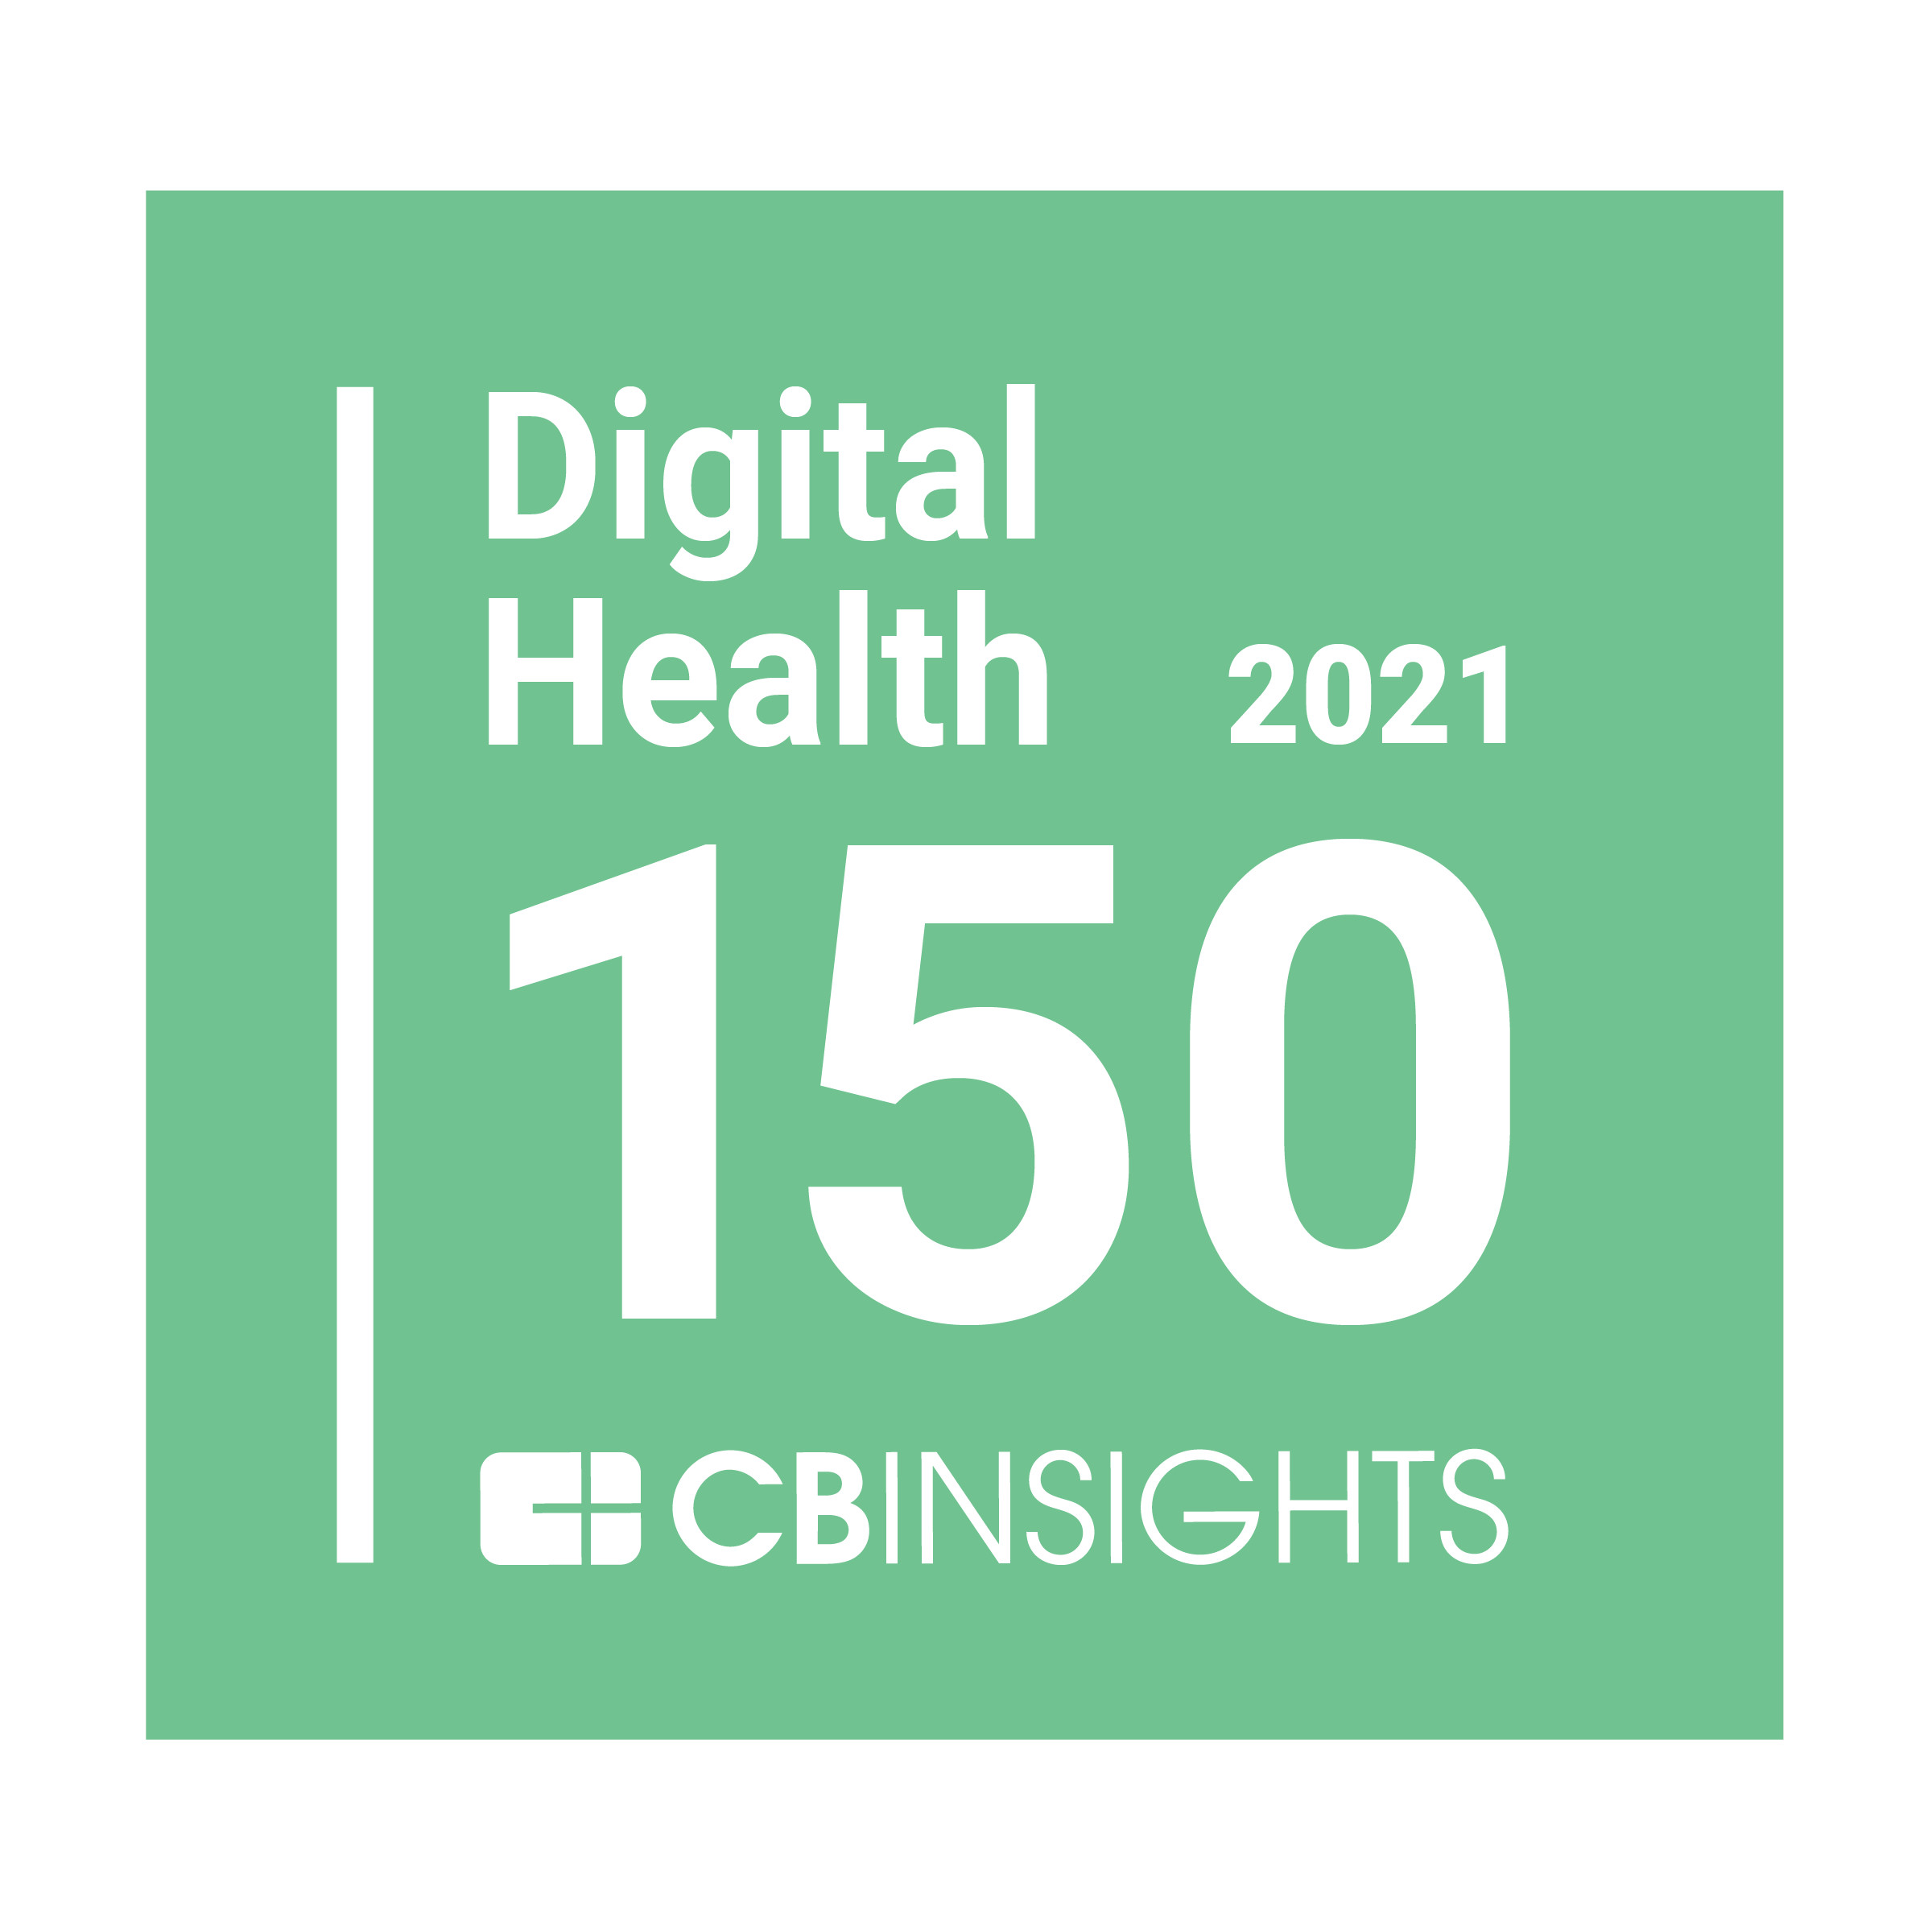 2021 CB Insights digital health list of most innovative digital health startups graphic